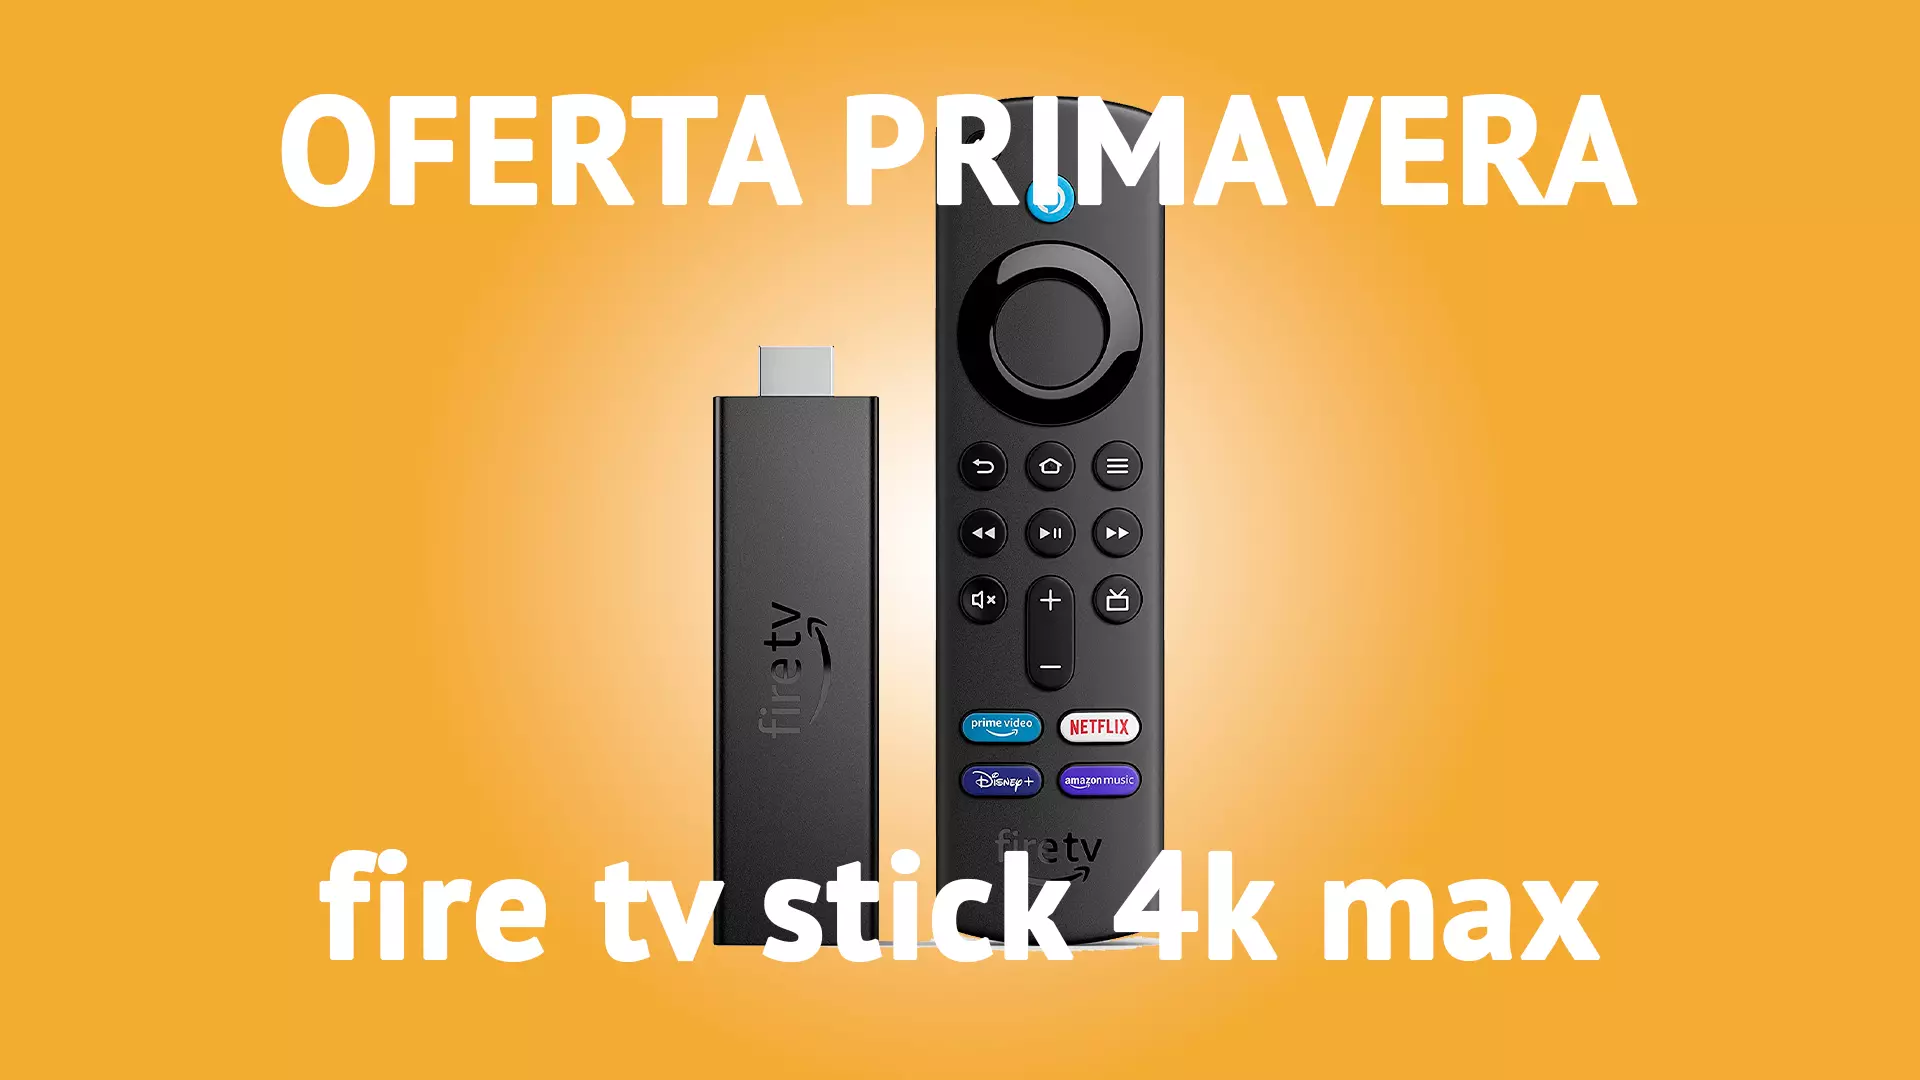 Fire TV Stick 4K Max en oferta de primavera por solo 39,99€